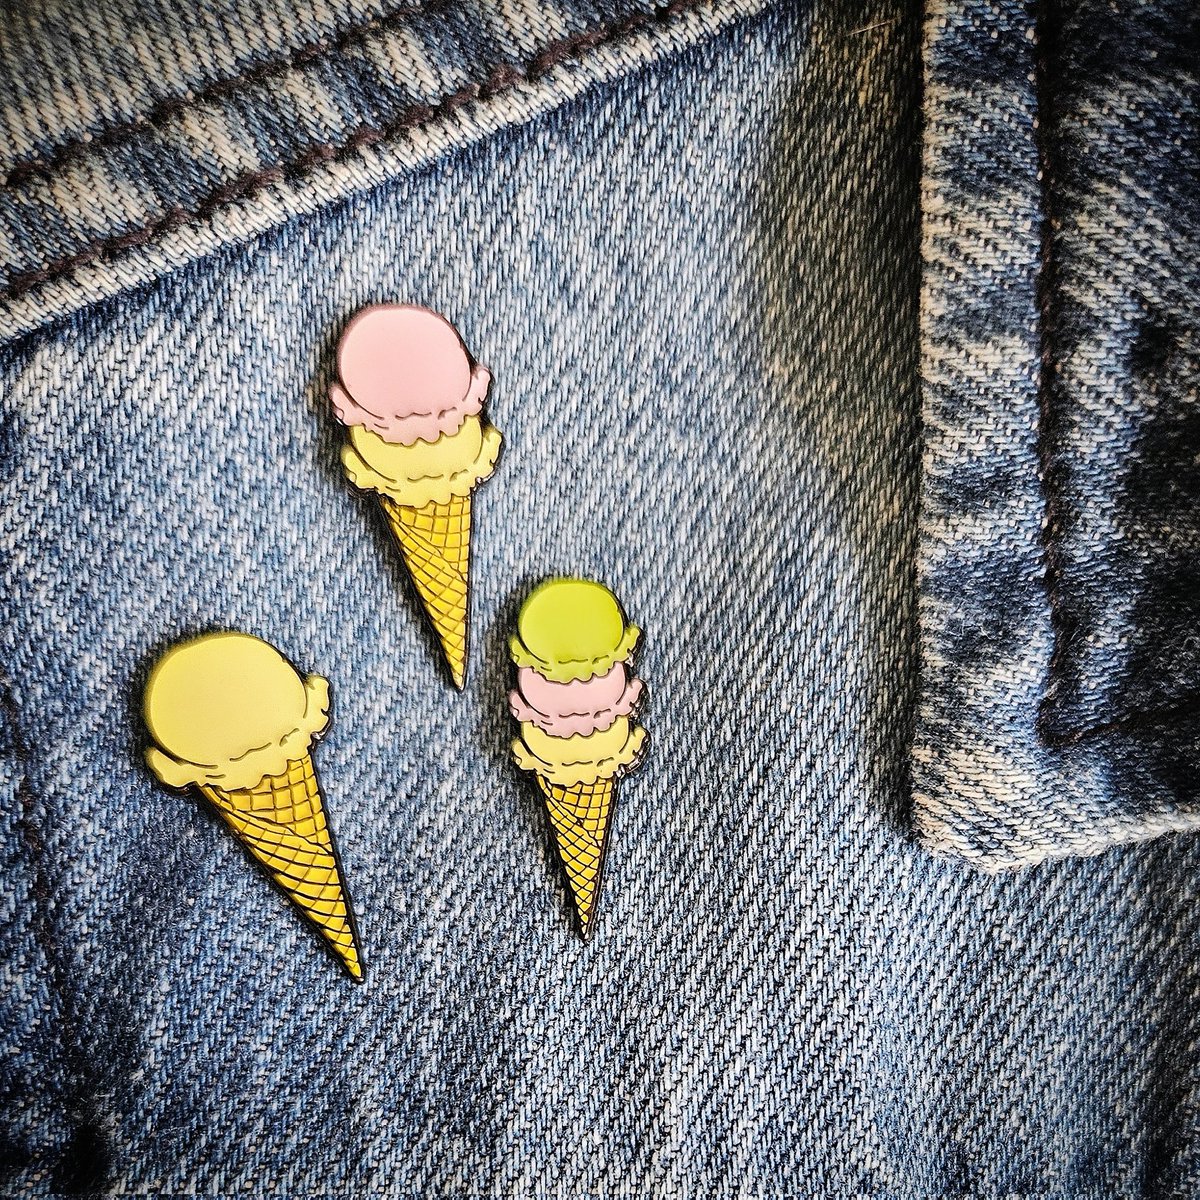 🍦Ice cream is always a good idea 🍦 Super cute ice cream pins in soft enamel 🍦

#custompins #pinlover #pinbadges #enamelpins #pins #badges #personalisedpins #icecreampin #icecream #pincollector